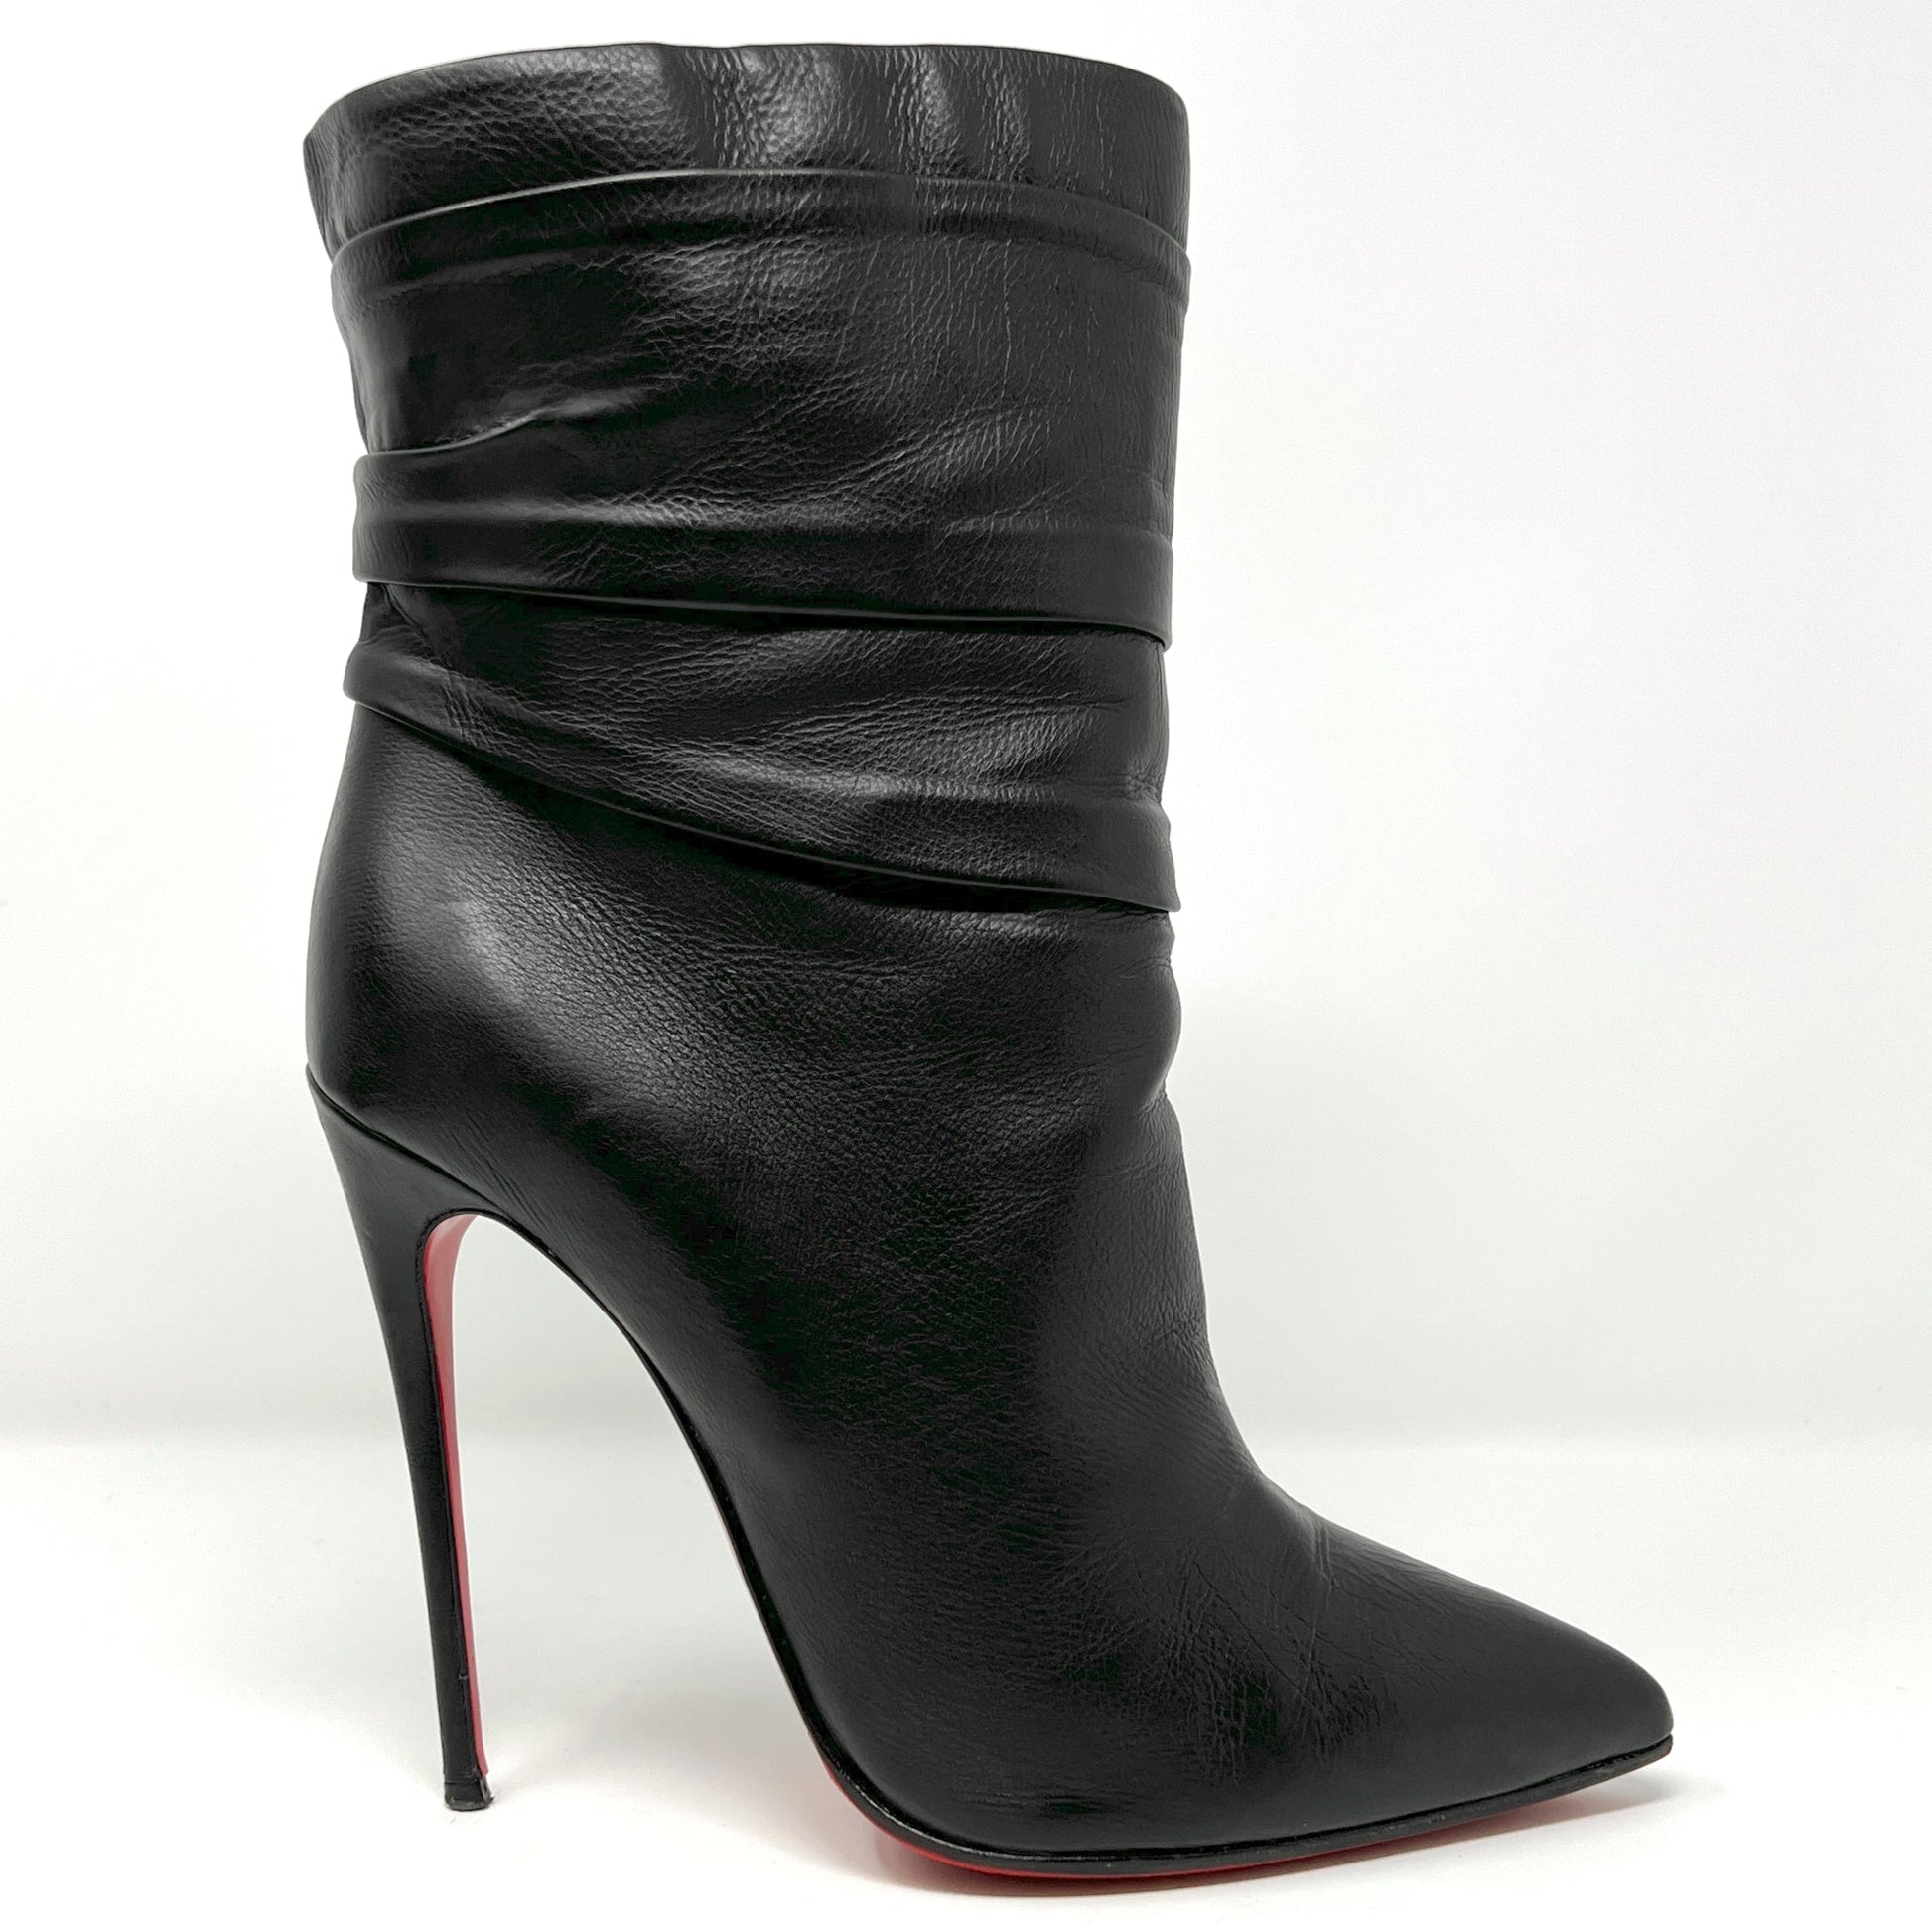 Christian Louboutin Ishtar Foulard Black Leather Mid Calf Pointed Stiletto Heels Boots